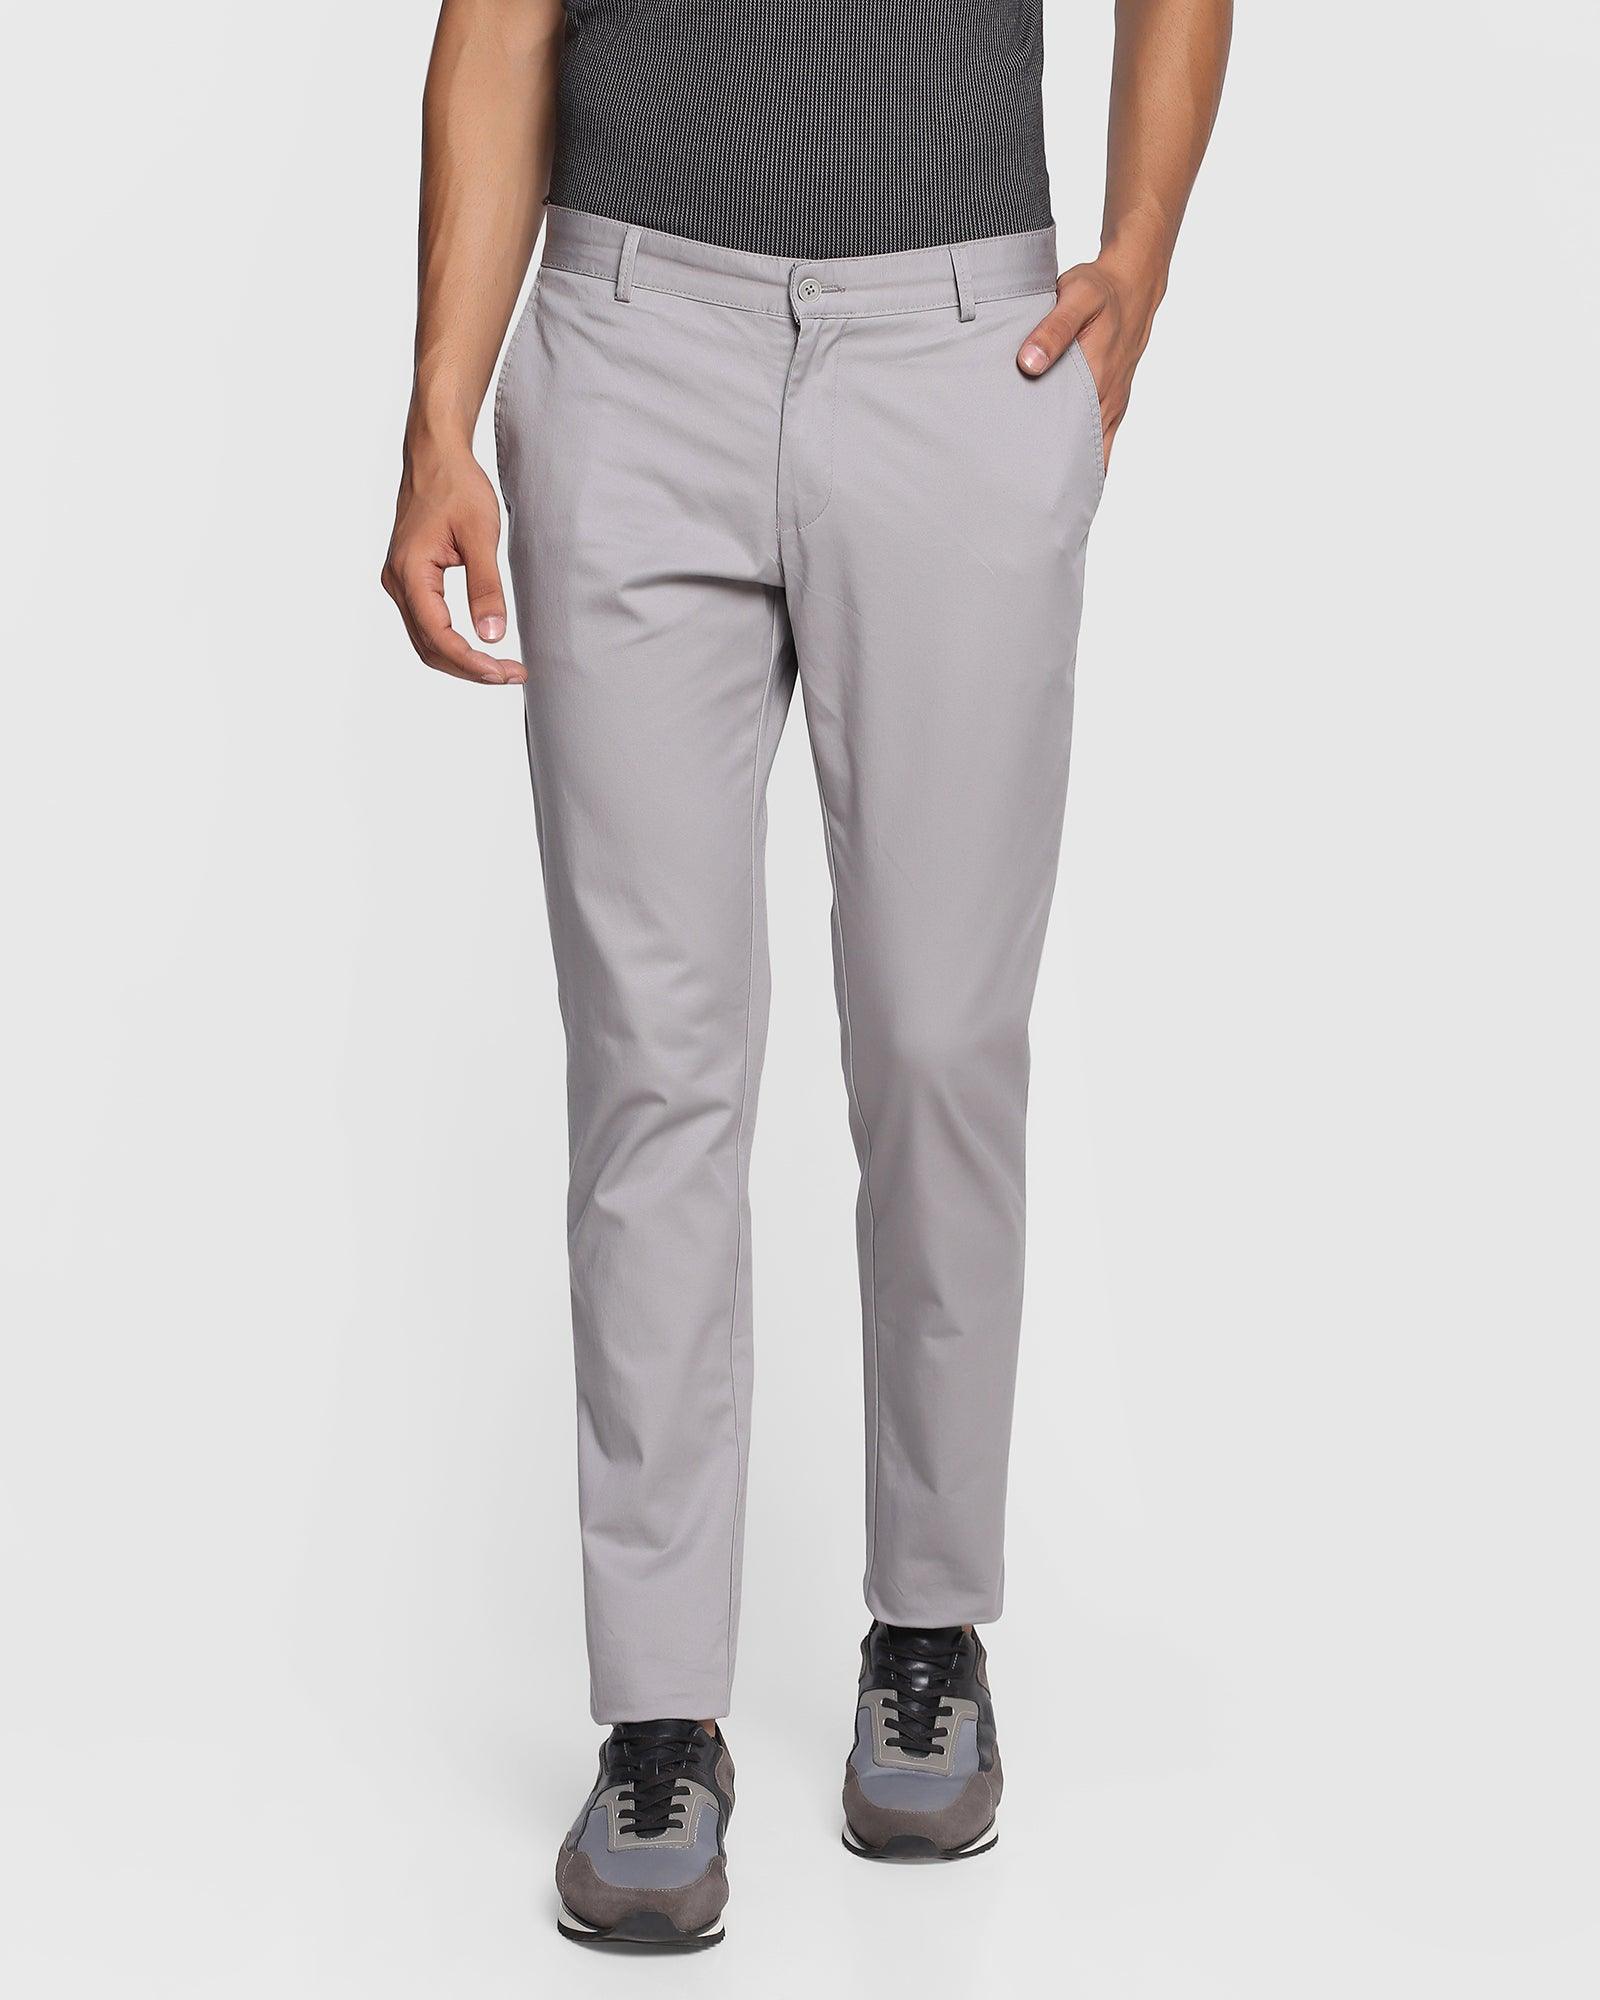 Slim Fit B-91 Casual Grey Solid Khakis - Heck